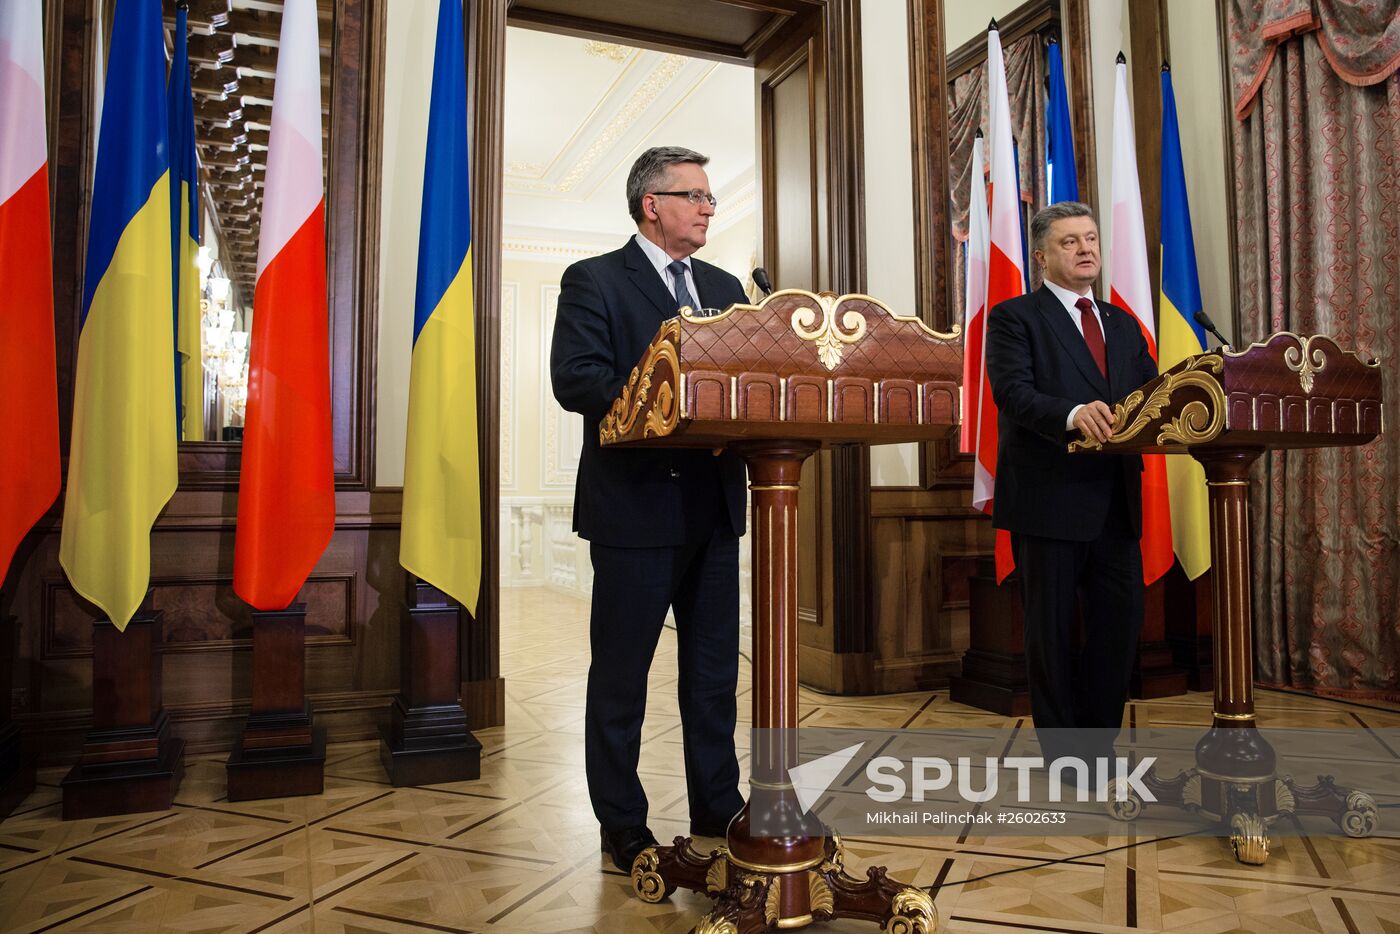 Ukrainian President Petro Poroshenko meets with Polish President Bronislaw Komorowski